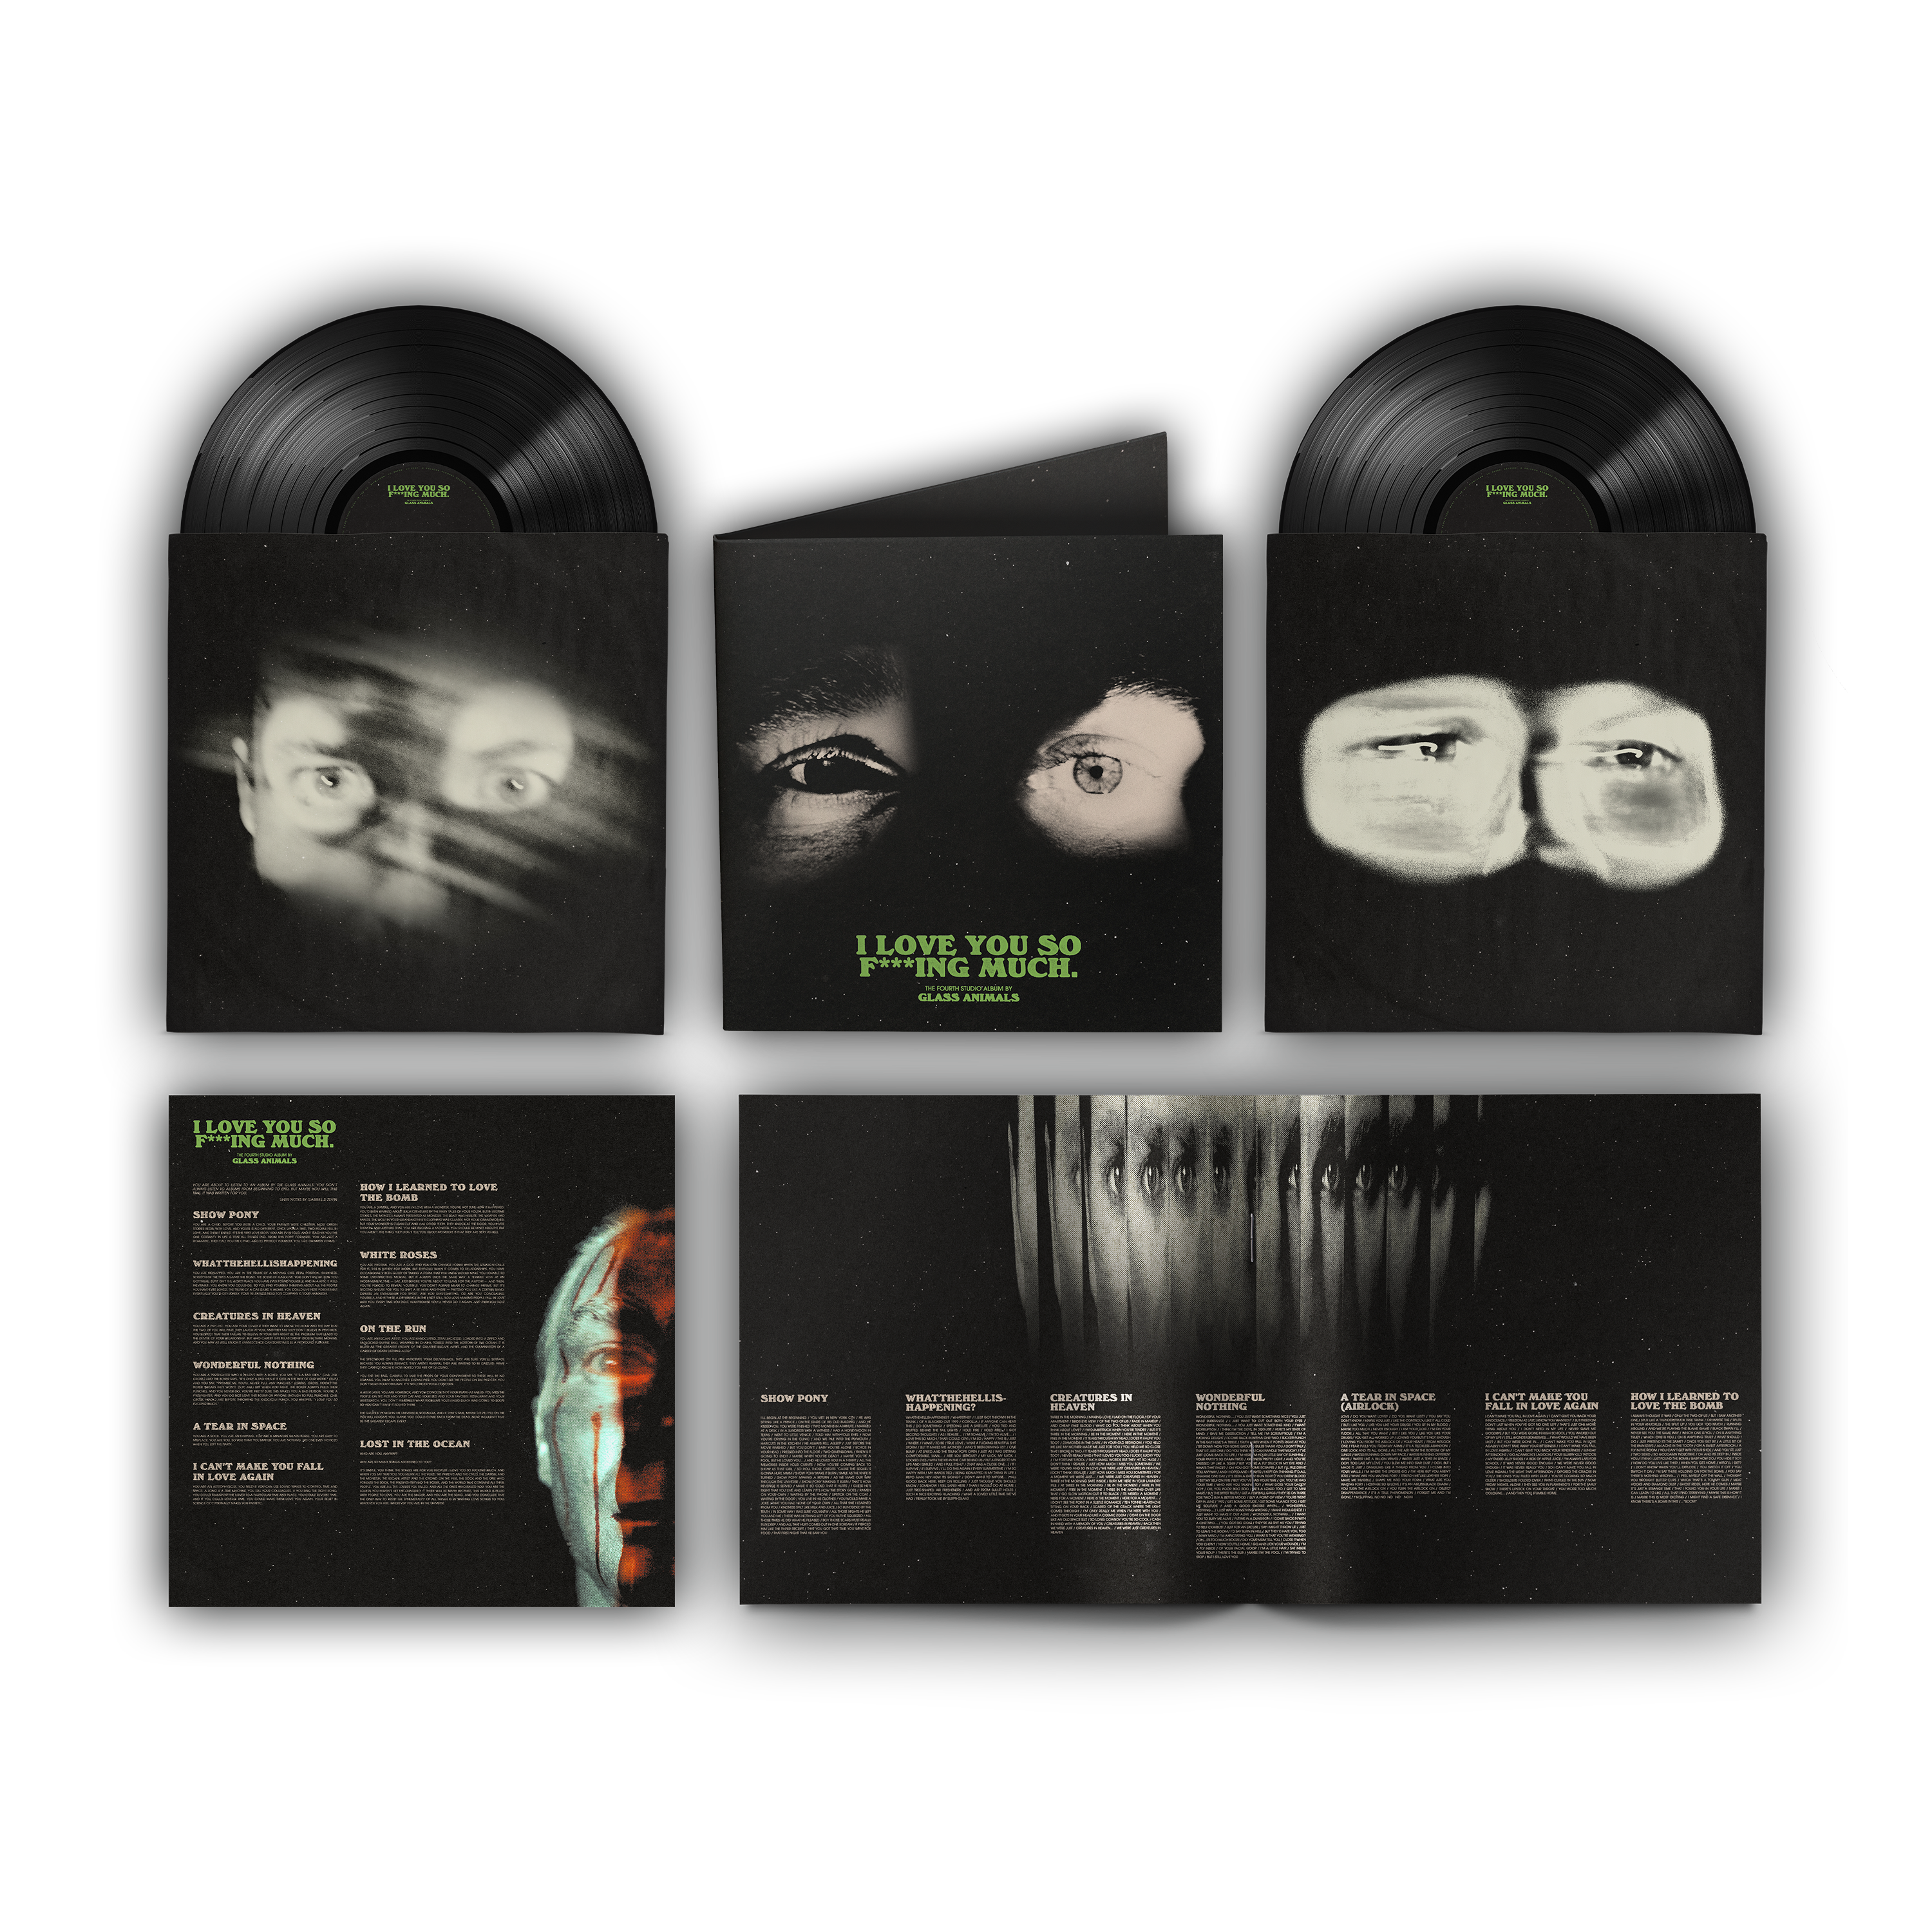 Glass Animals - ILYSFM: Limited Edition Audiophile Vinyl